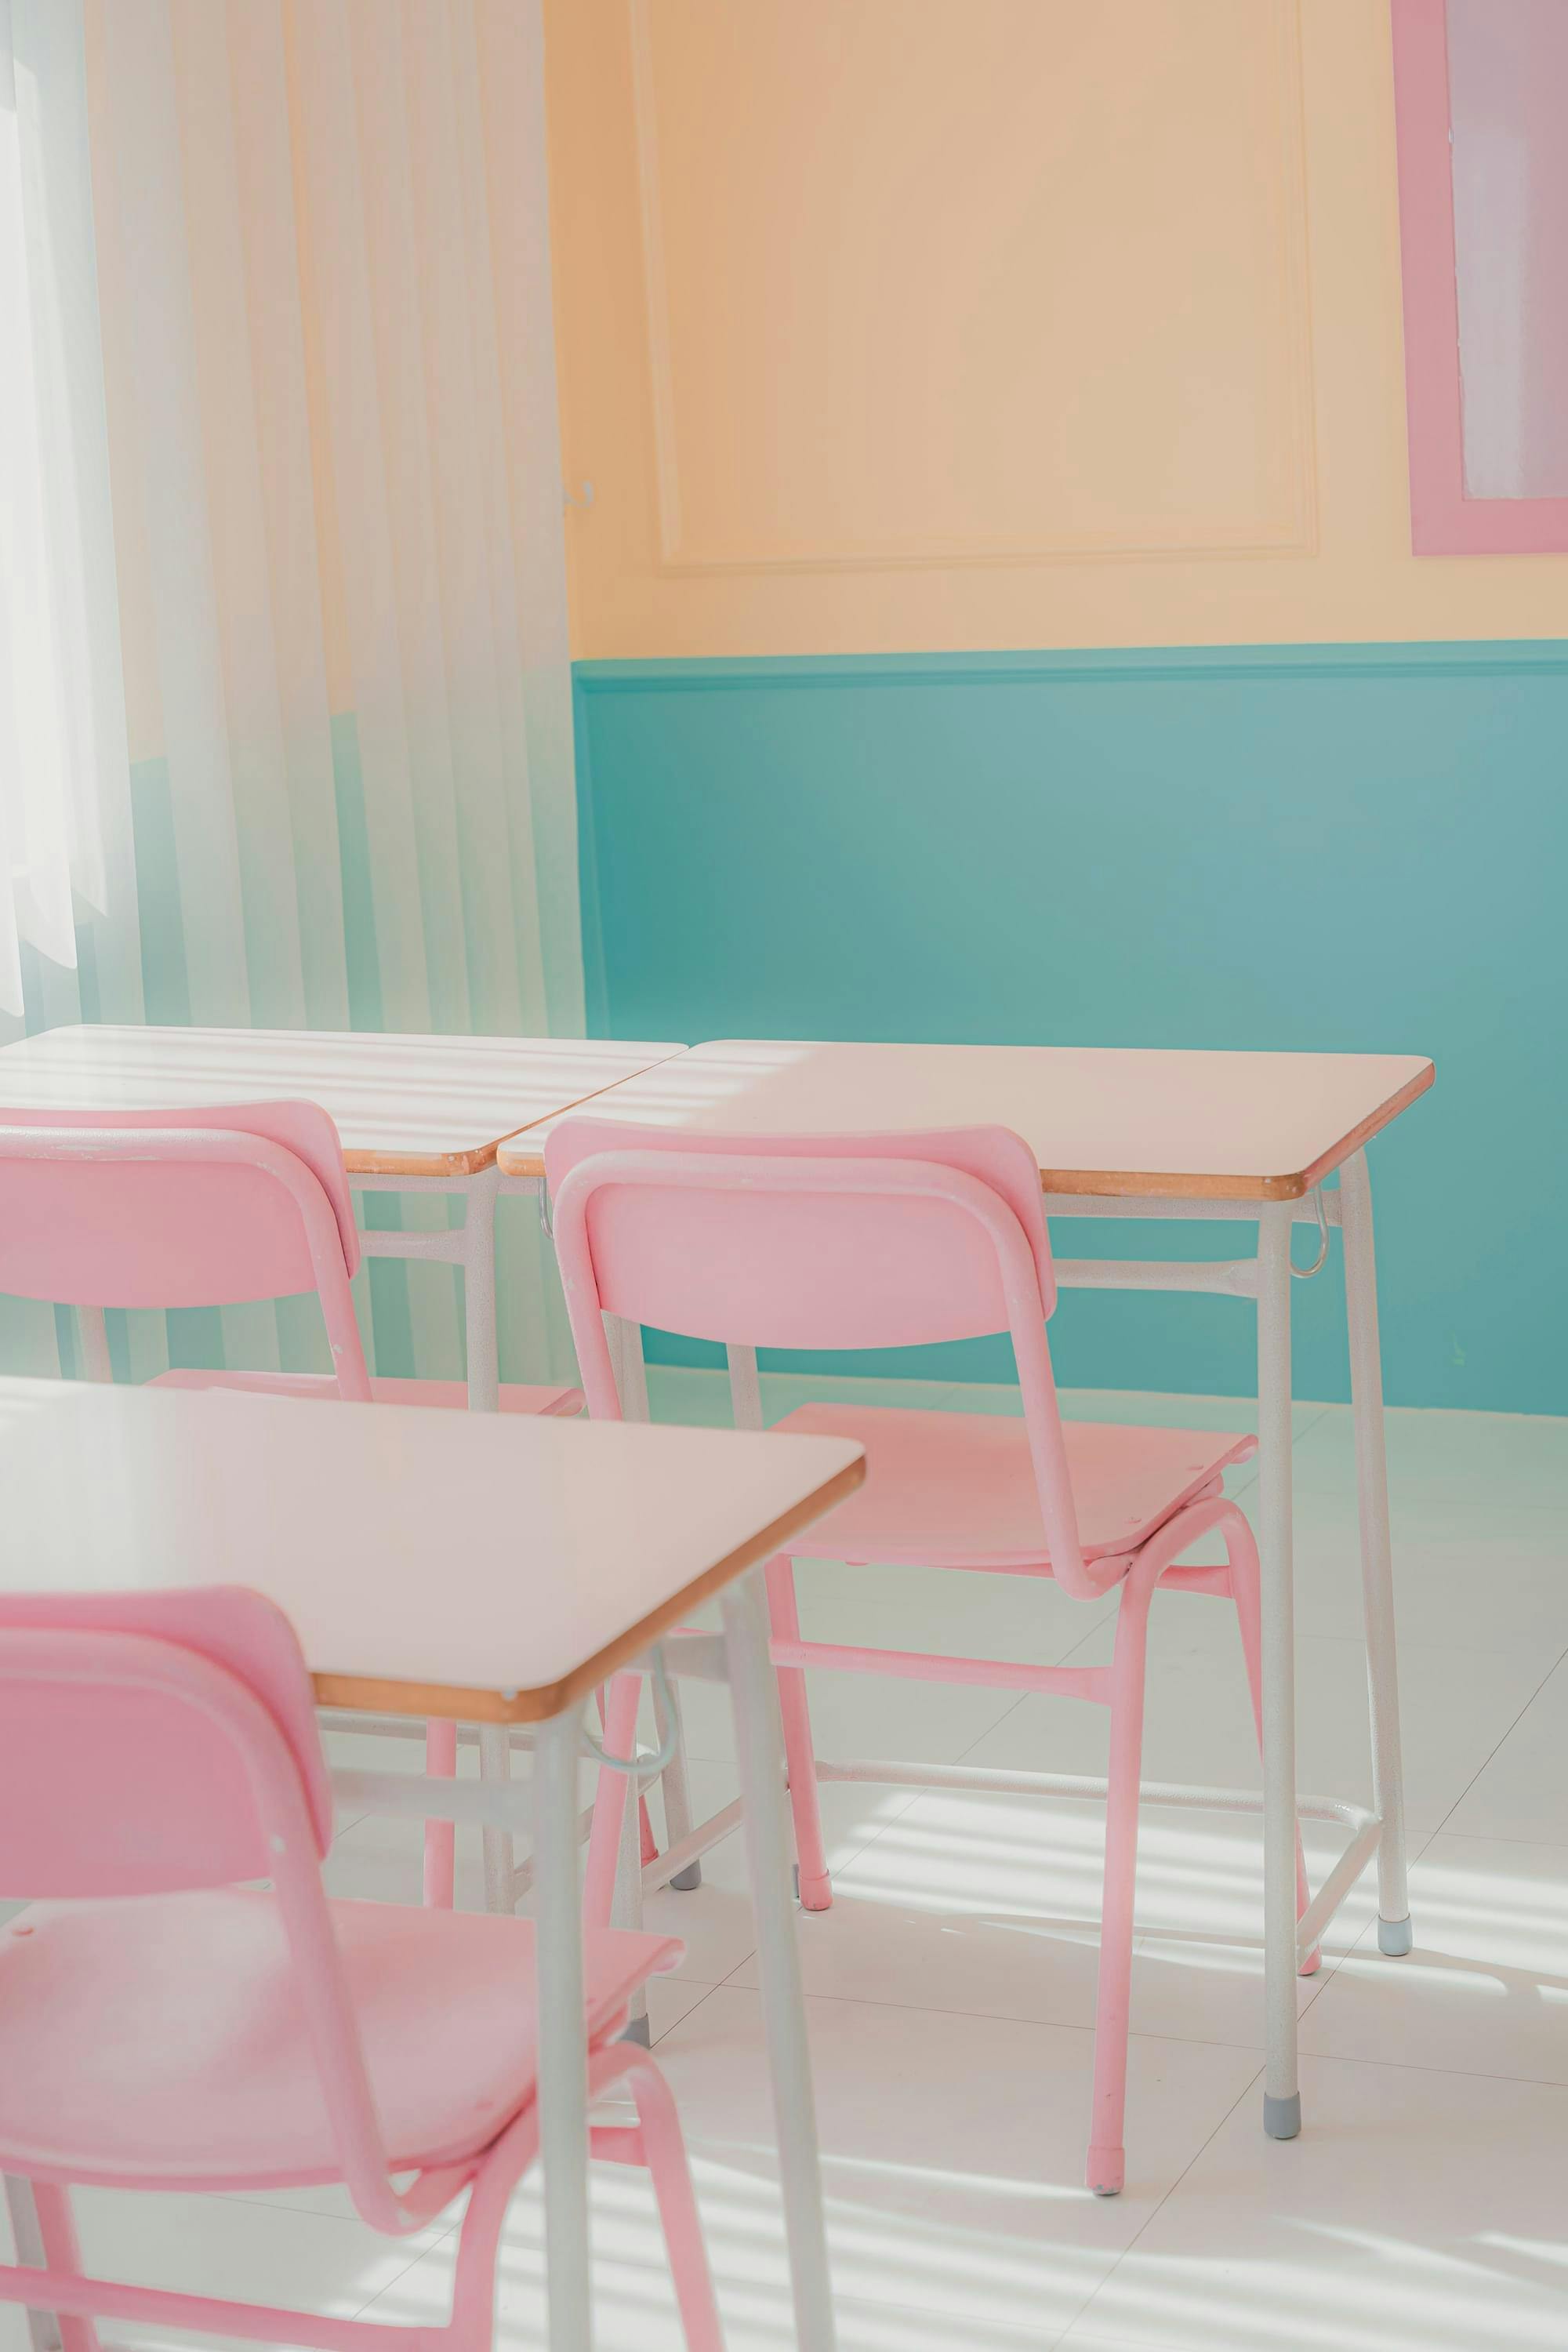 Pastelkleurig klaslokaal met 3 tafels en 3 roze stoelen.